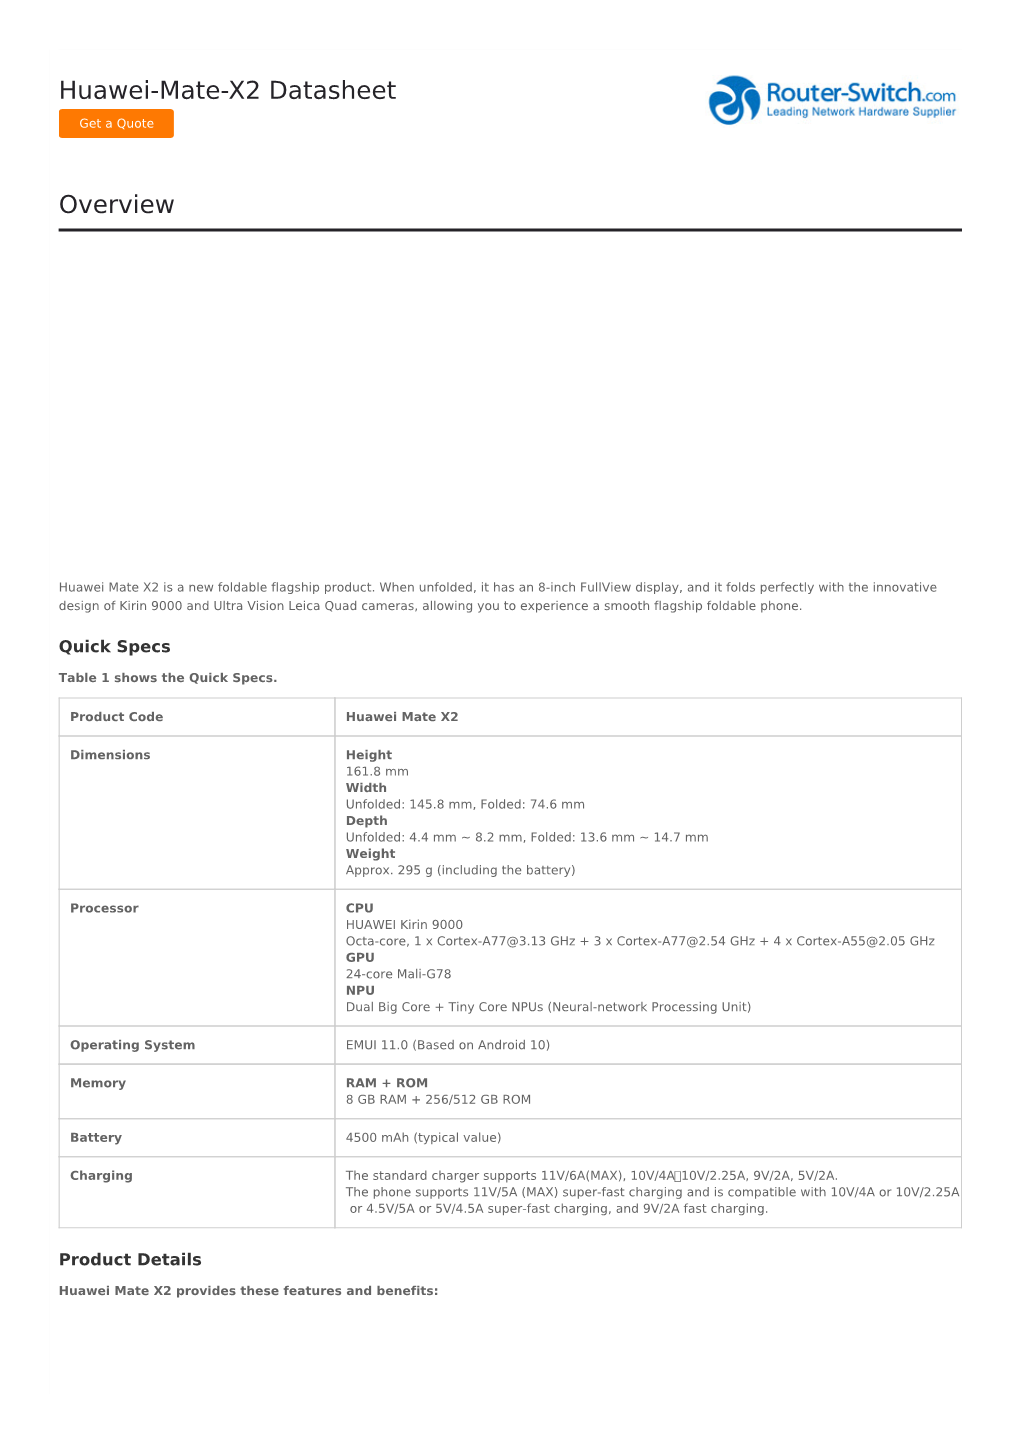 Huawei-Mate-X2 Datasheet Overview